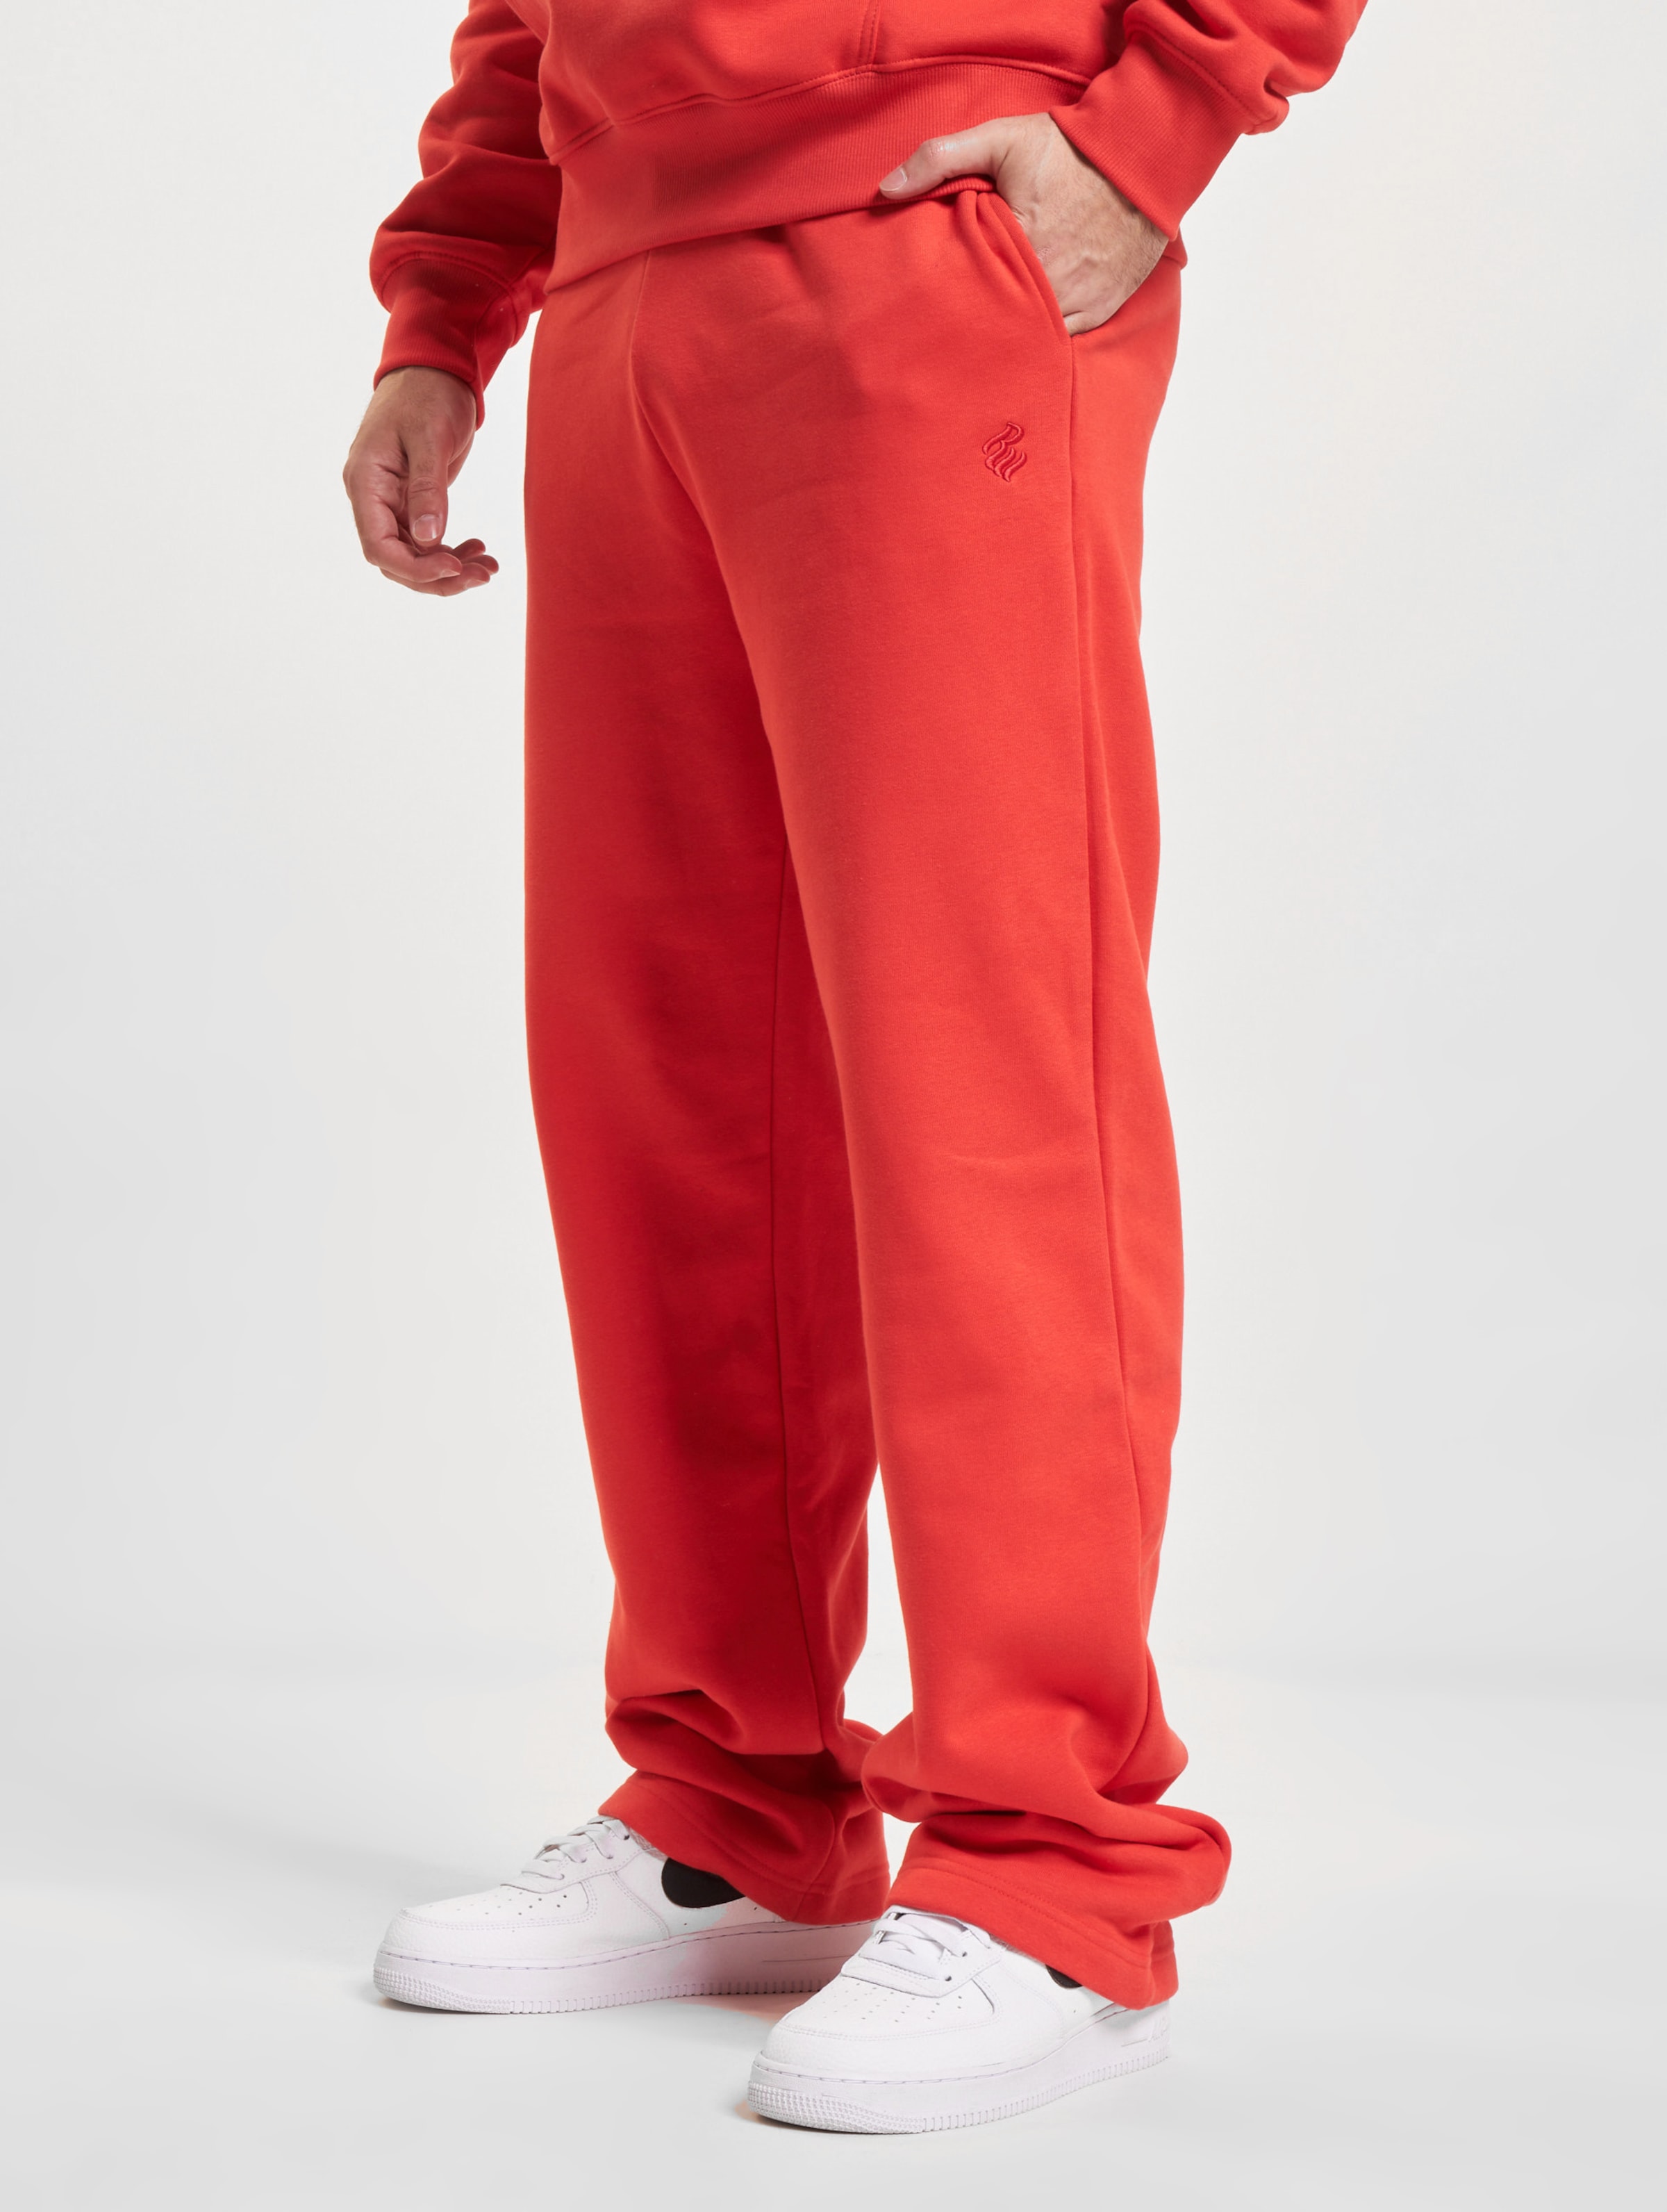 Rocawear Cherry Jogginghosen Mannen op kleur rood, Maat L